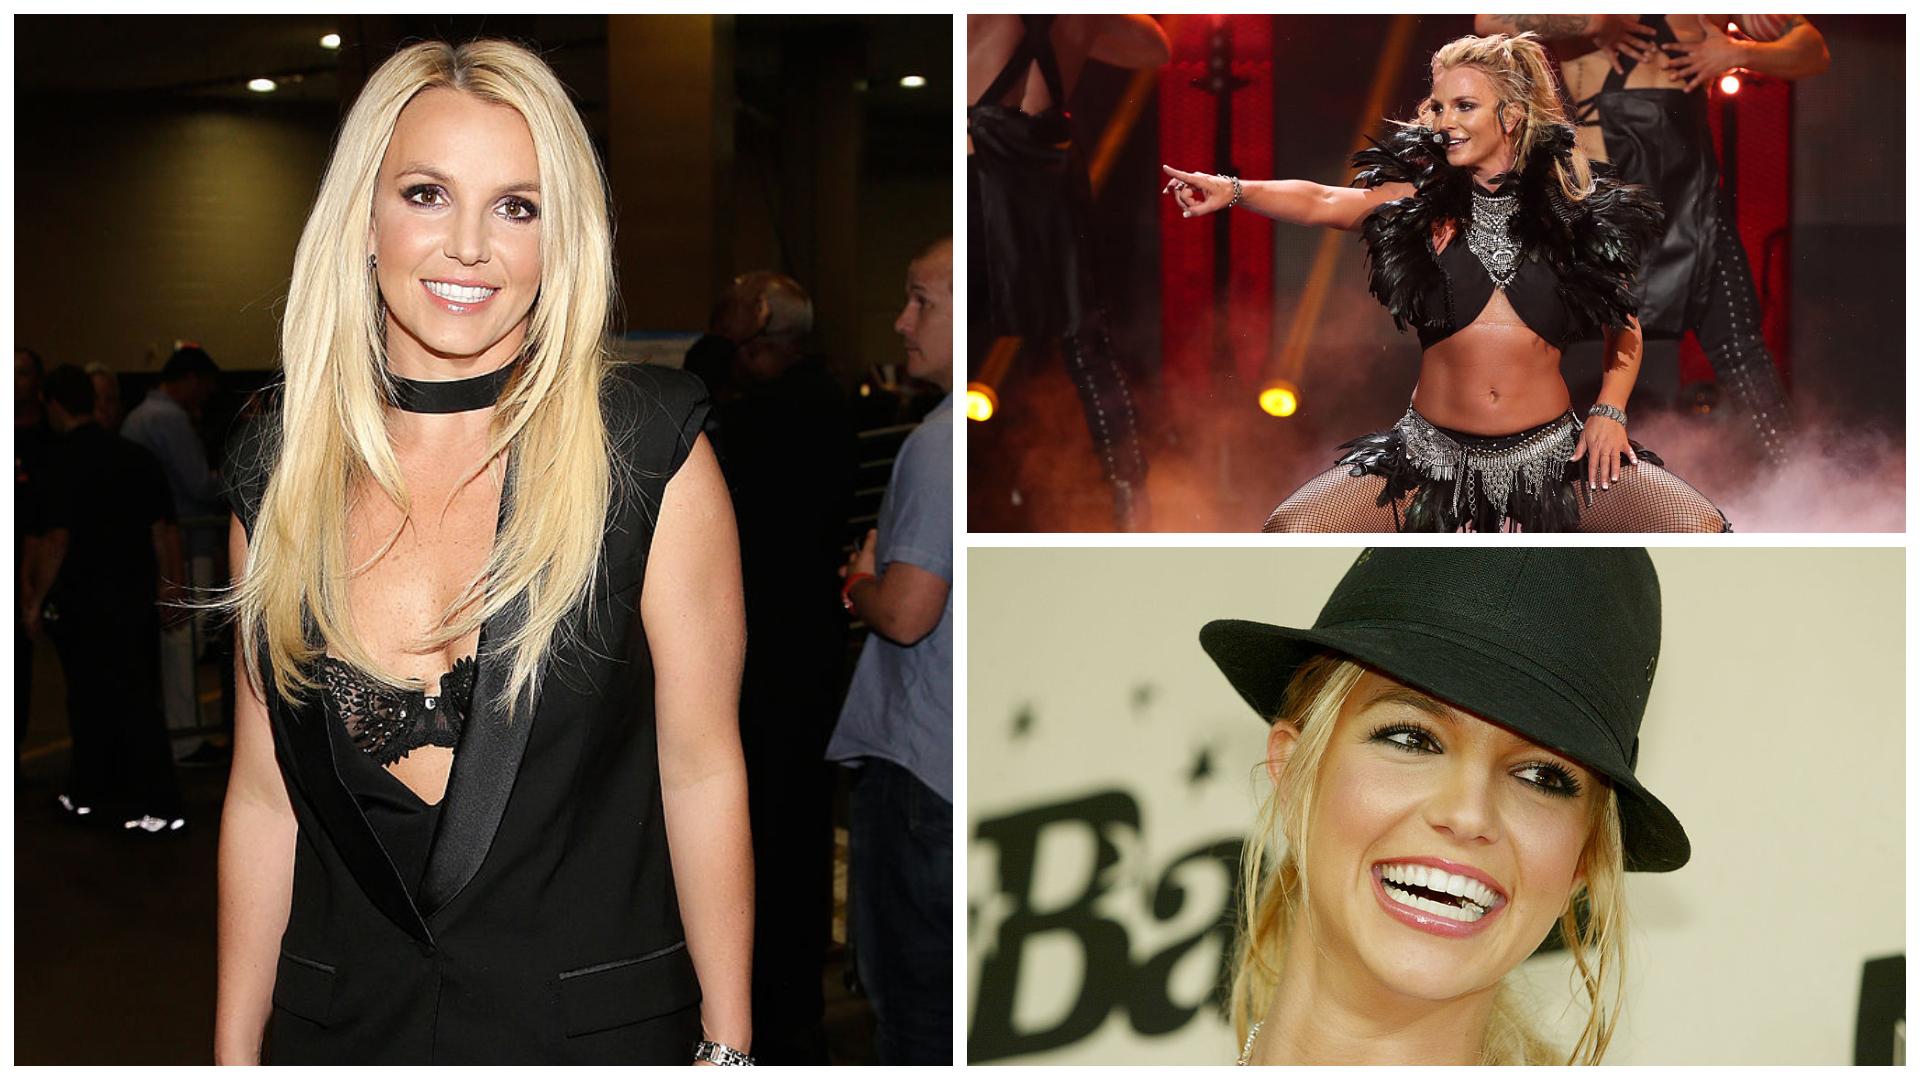 Colaj cu Britney Spears